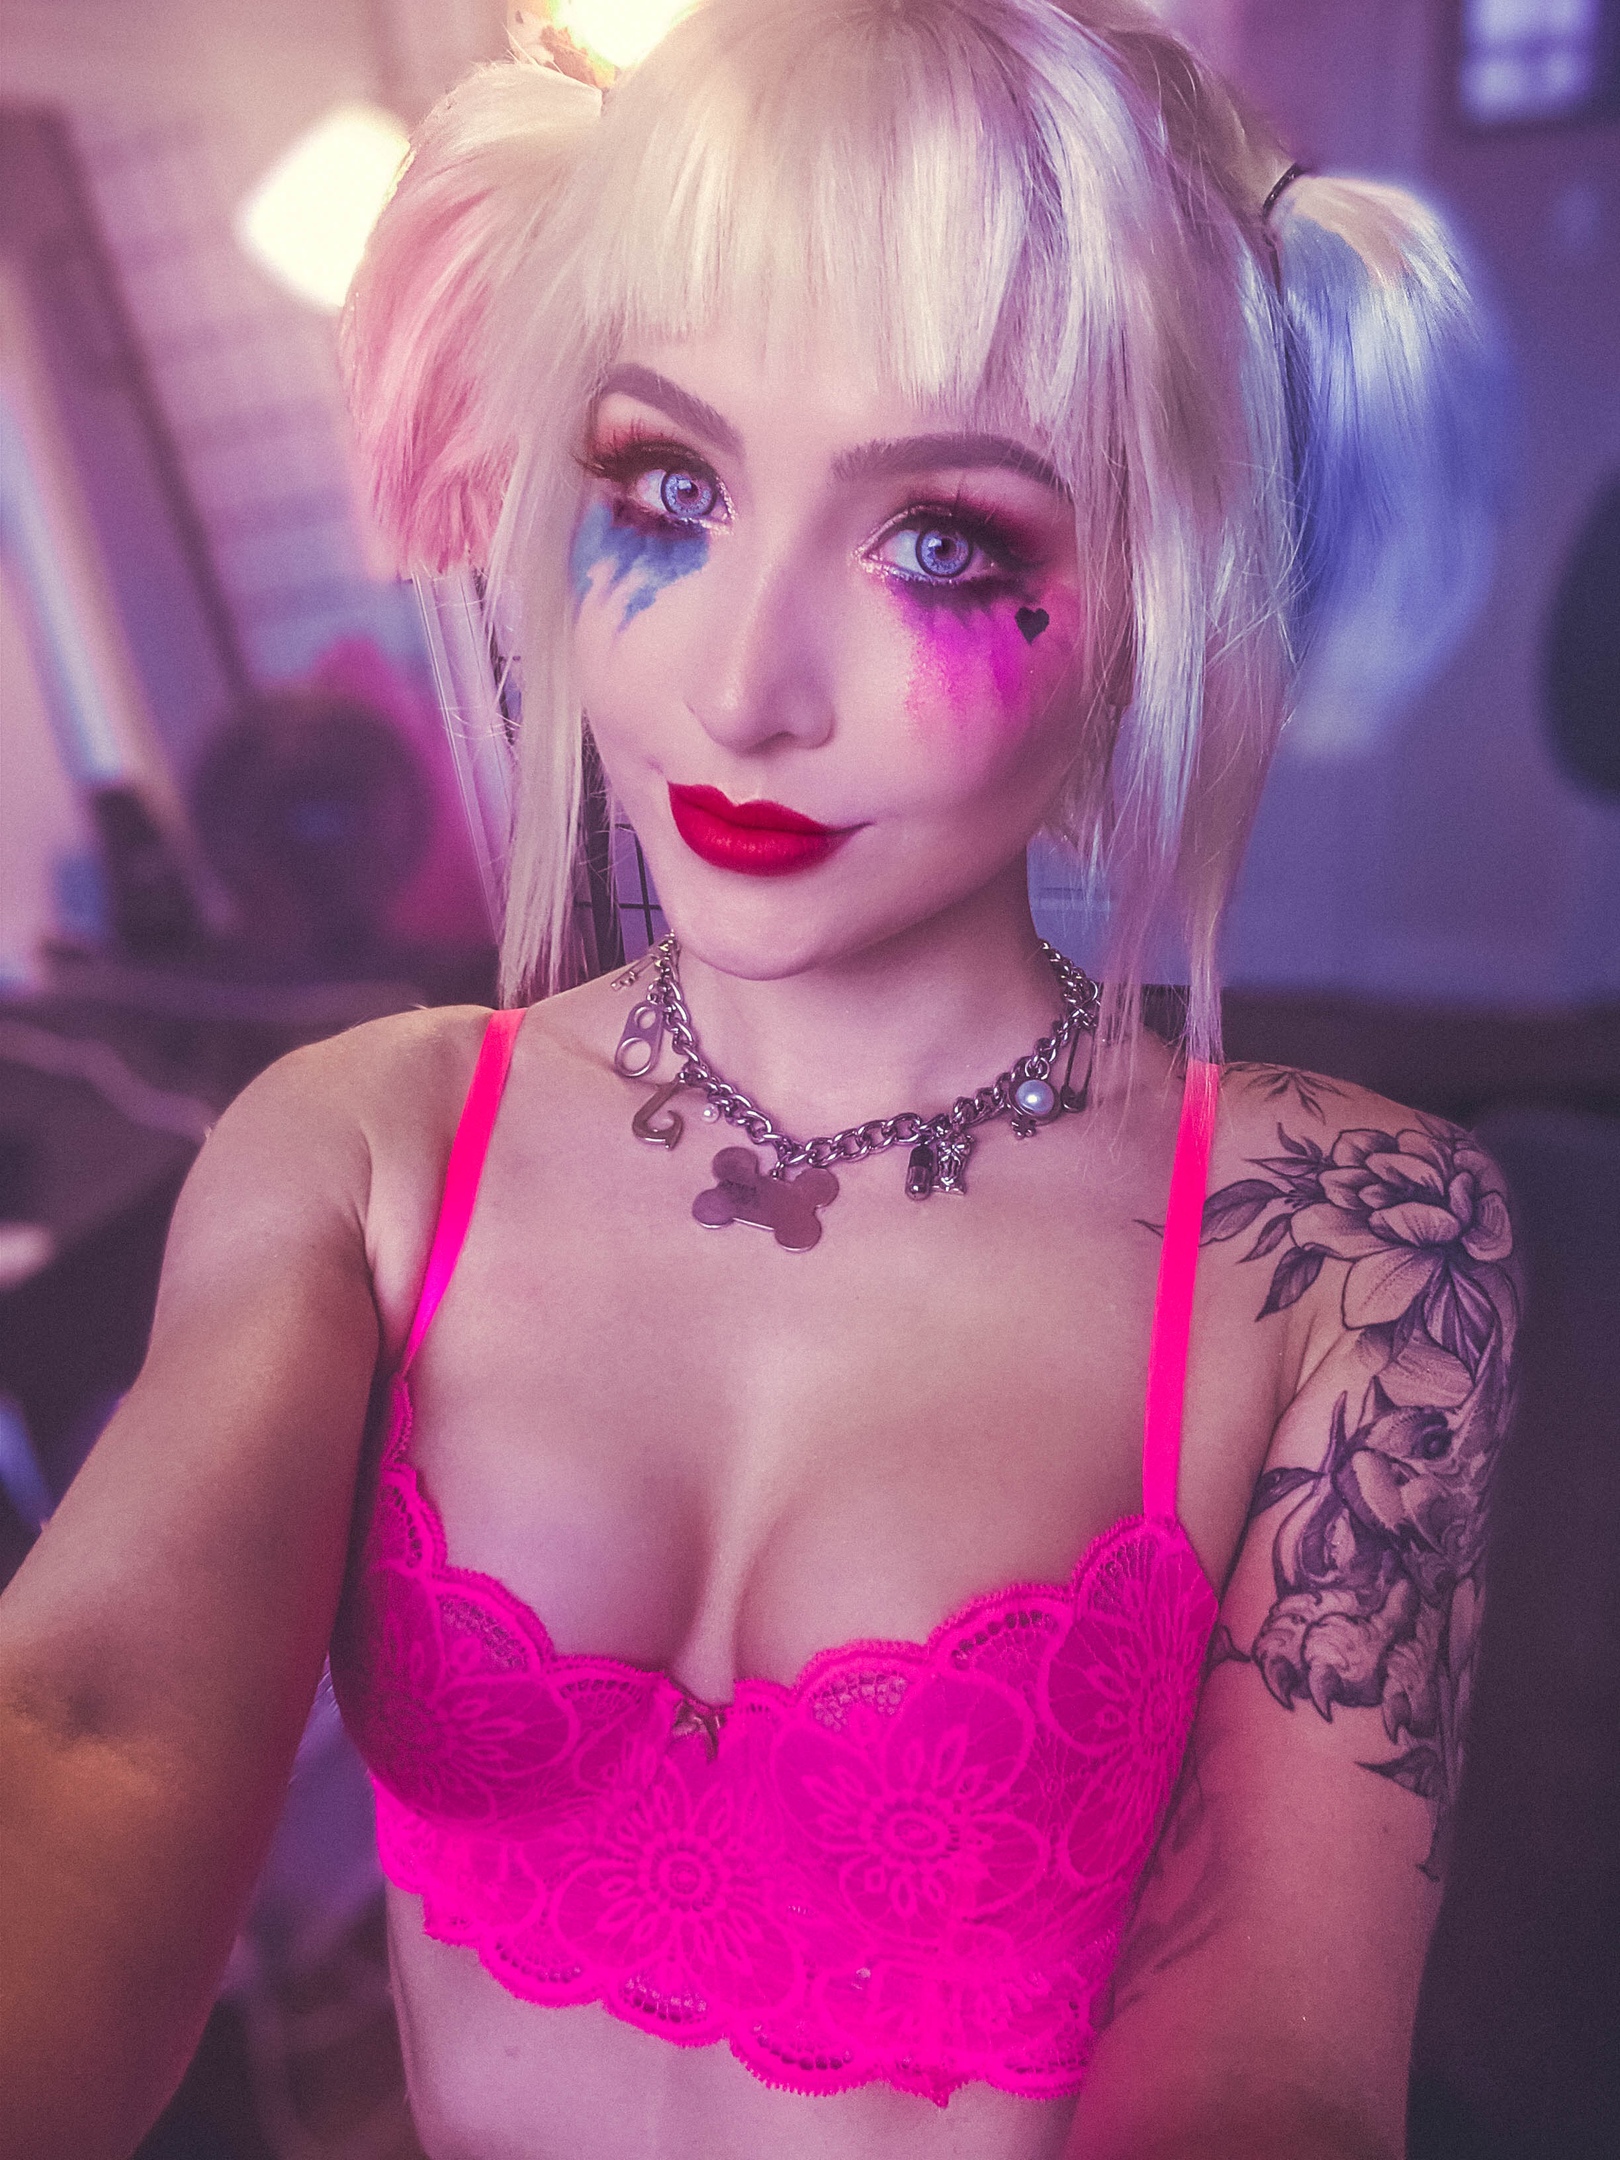  Harley boudoir selfie 